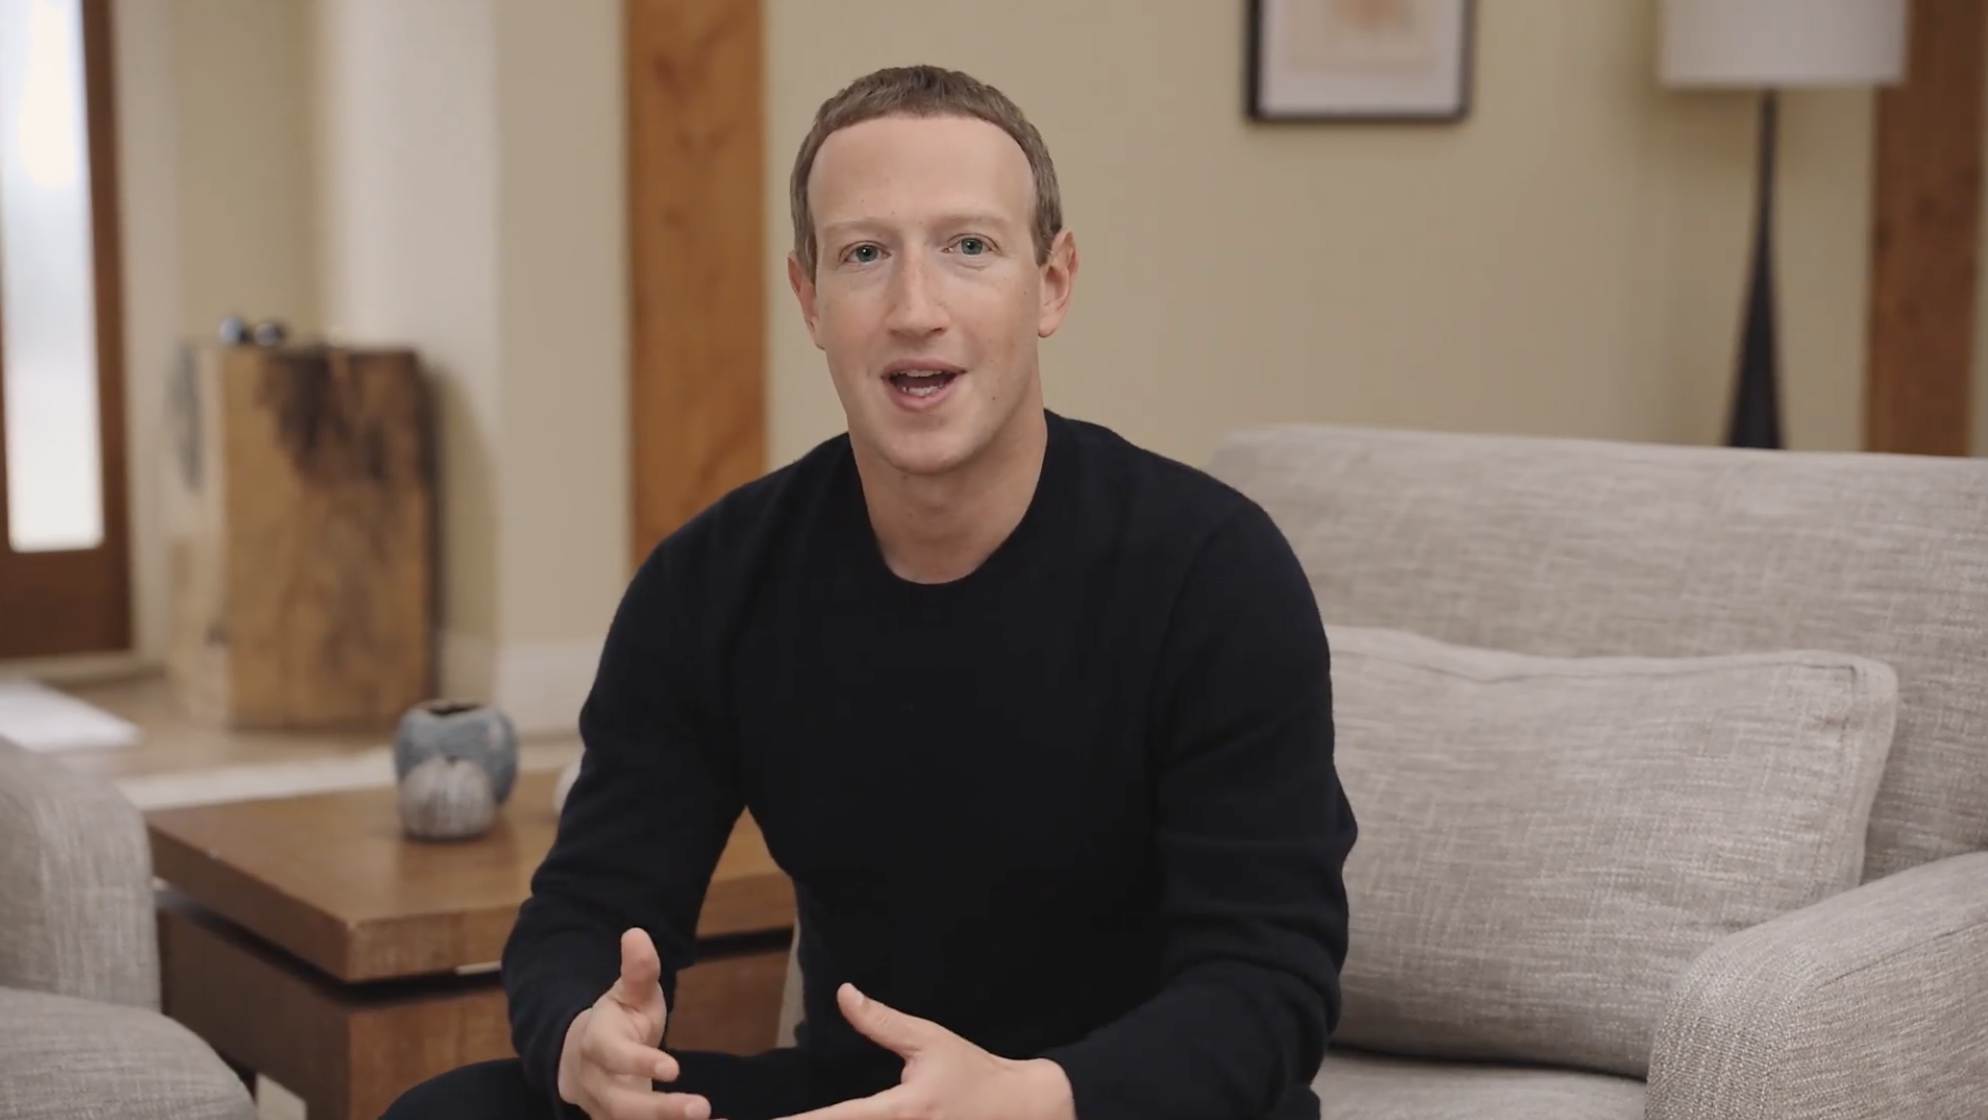 alt="Mark Zuckerberg Facebook จ้างวิศวกรไม่ได้ตามเป้า"